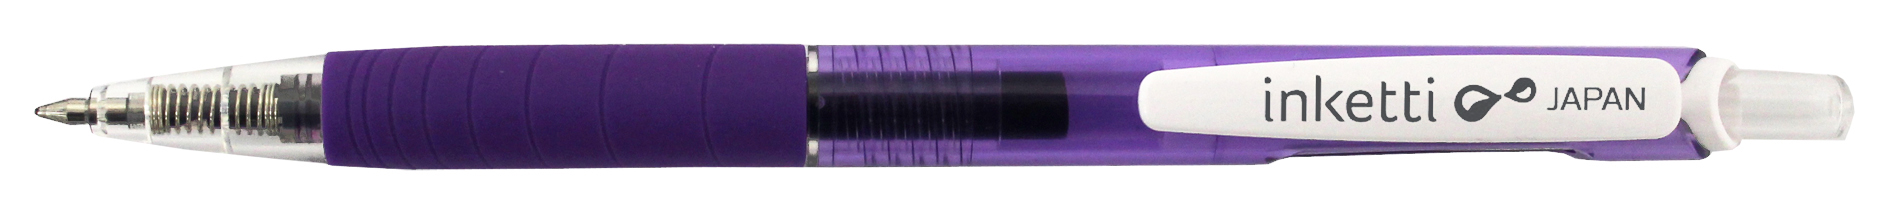 Pix cu gel Penac Inketti, rubber grip, 0.5mm, corp violet transparent - scriere violet